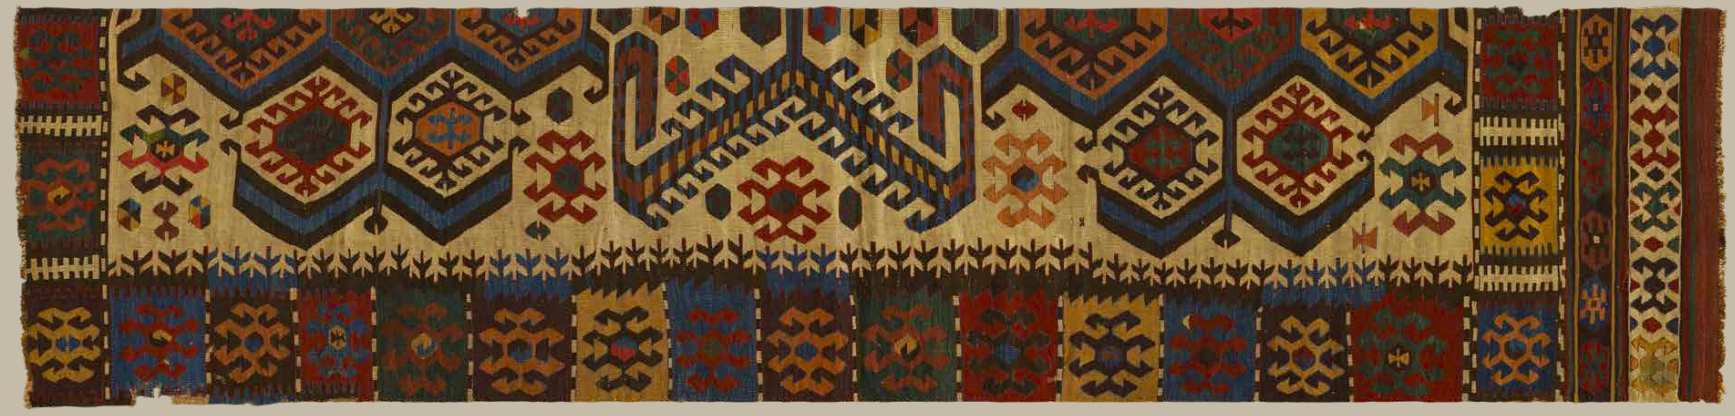 A very elaborate nomadic kilim, mid 19th century, Cental Turkey Megalli Collection Washington DC. Textile Museum